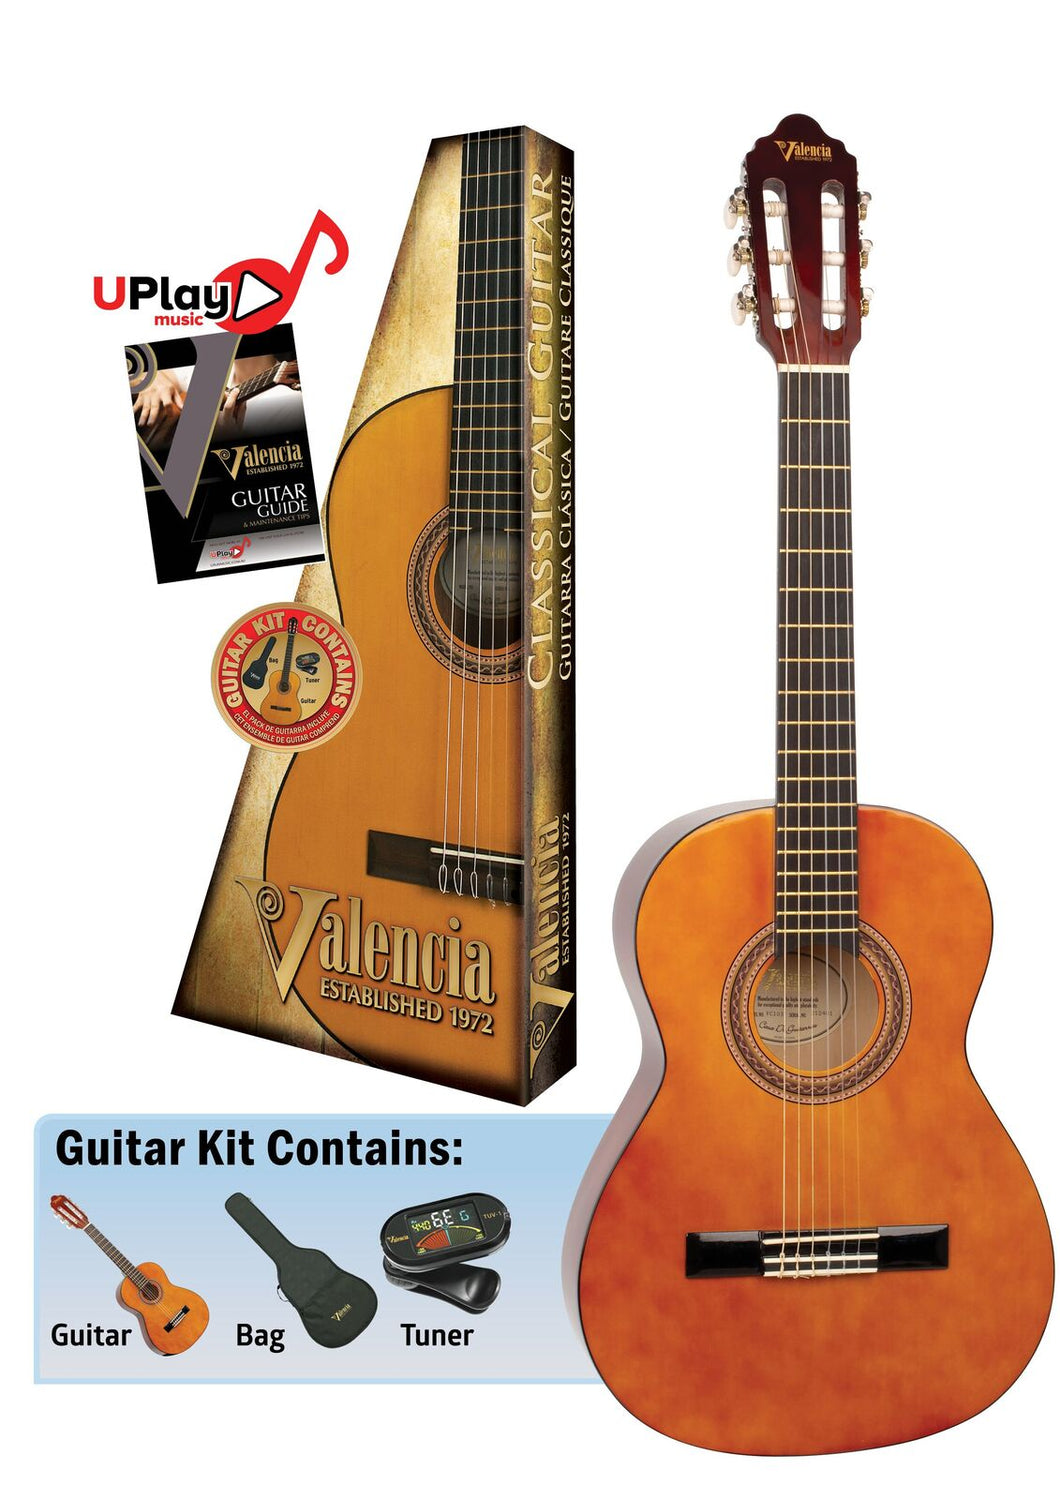 Valencia VC101K 1/4 Size Classical Guitar Kit